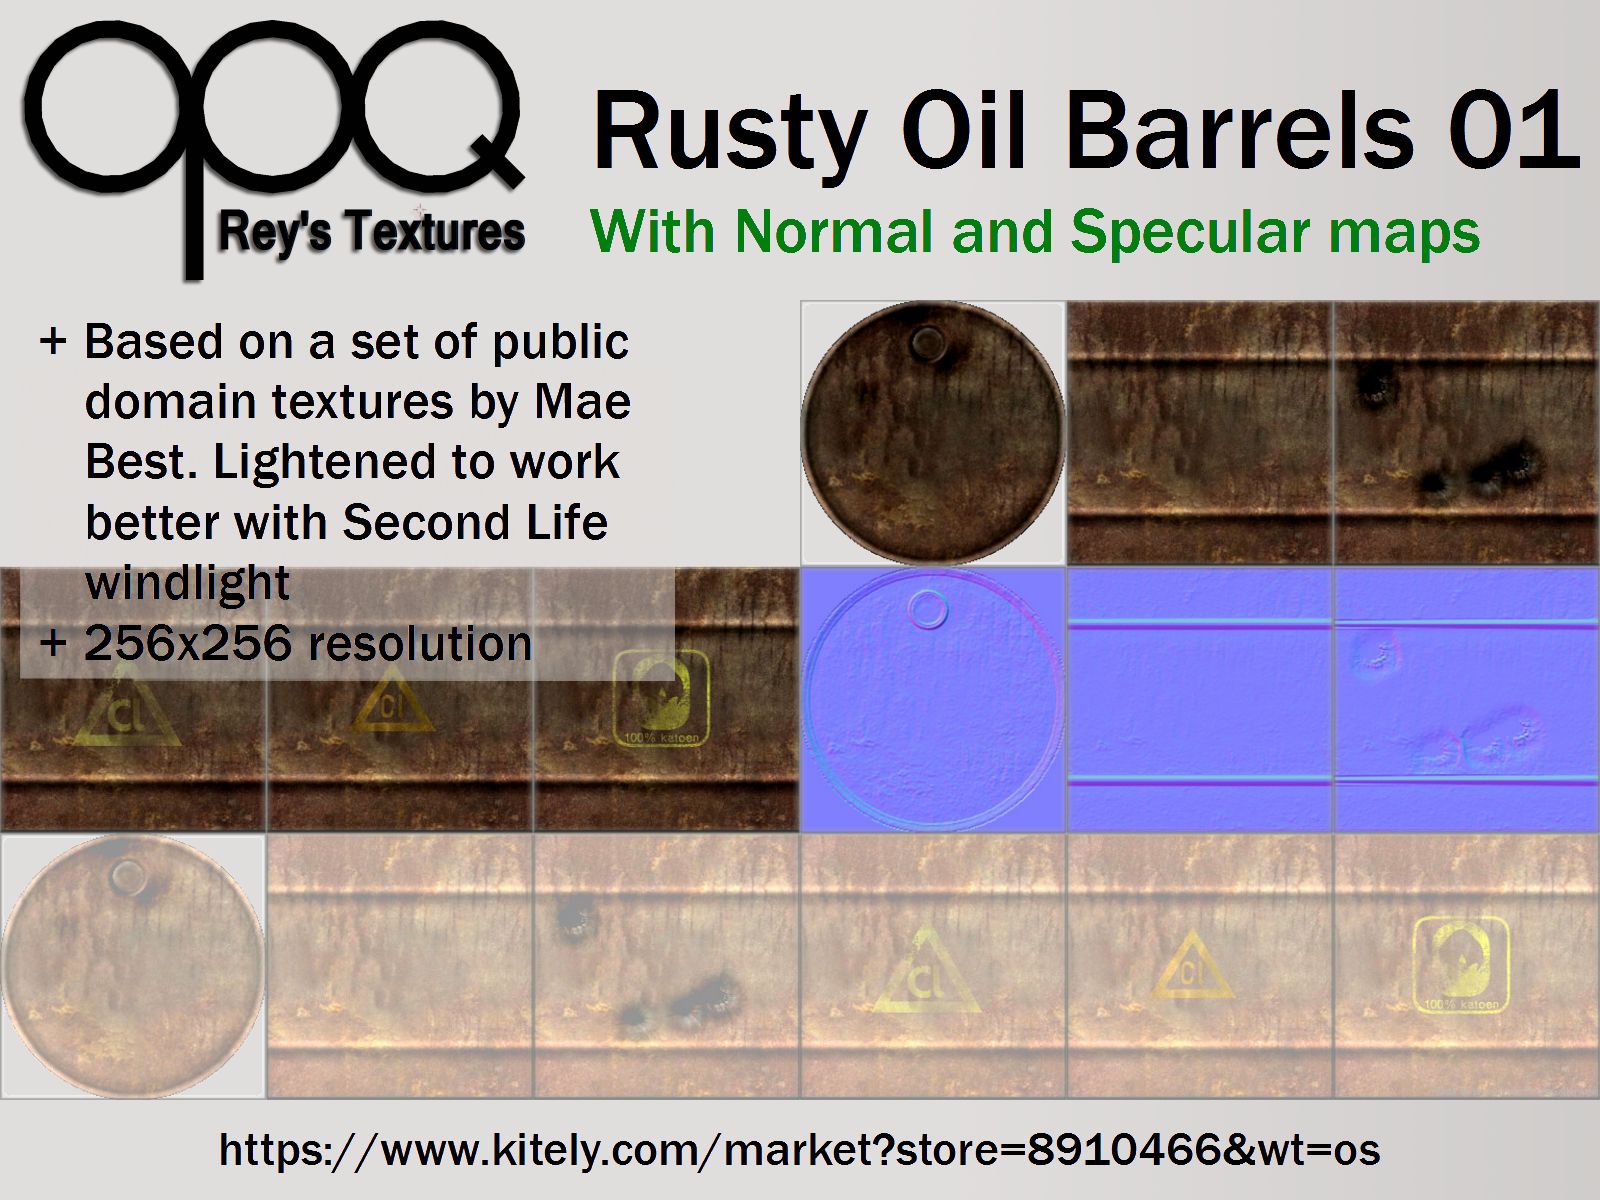 Rey's Rusty Oil Barrels 01 with mats Poster Kitely.jpg